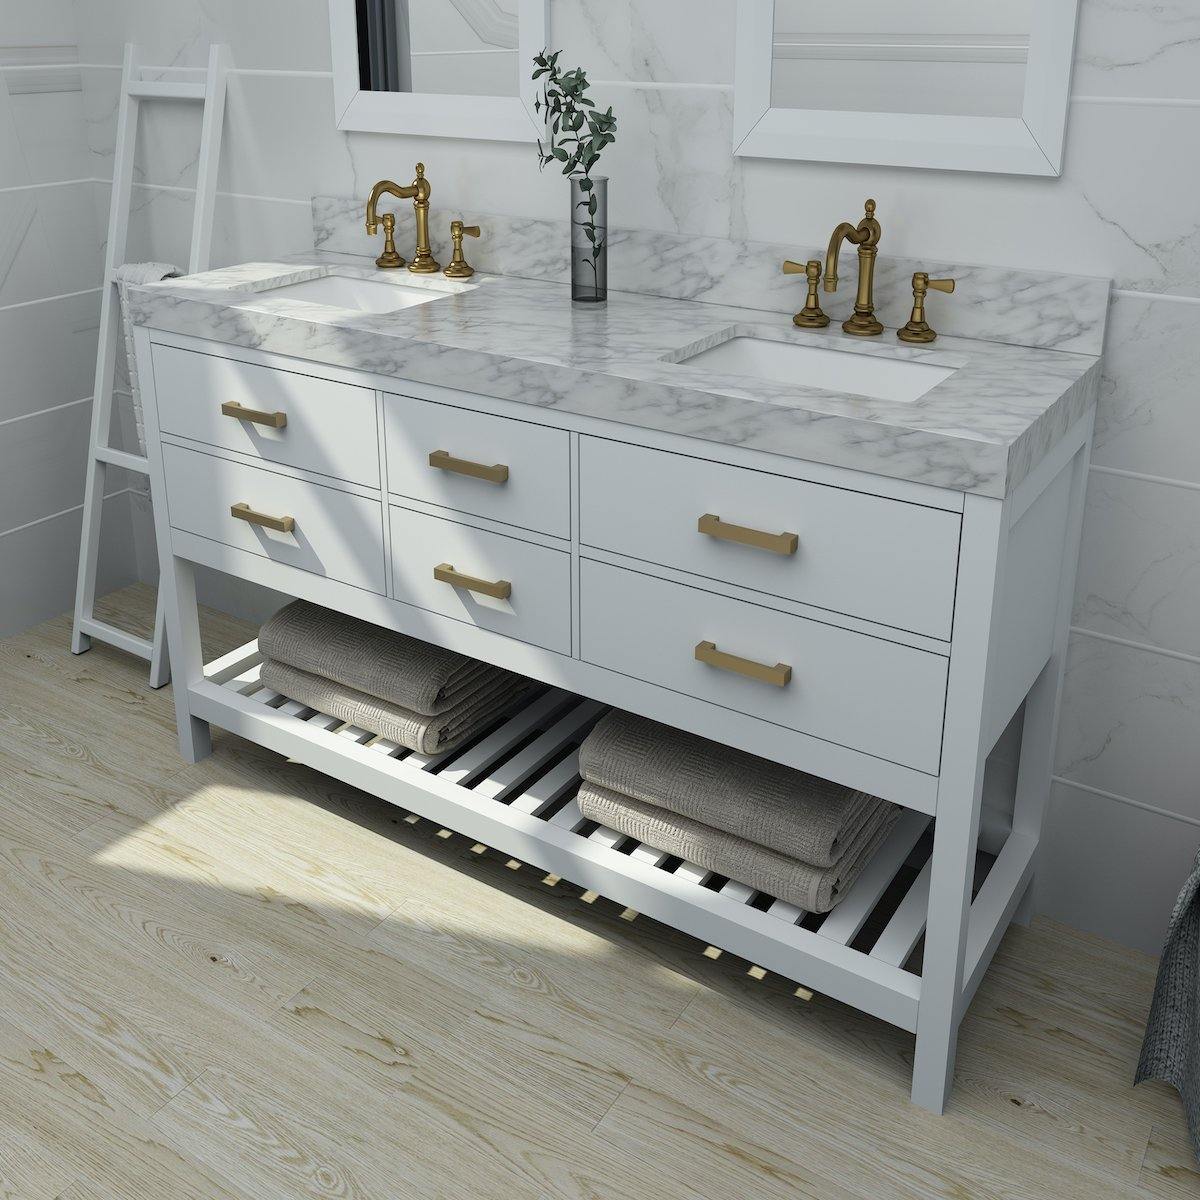 Ancerre Designs Elizabeth 72 Inch White Double Vanity in Bathroom